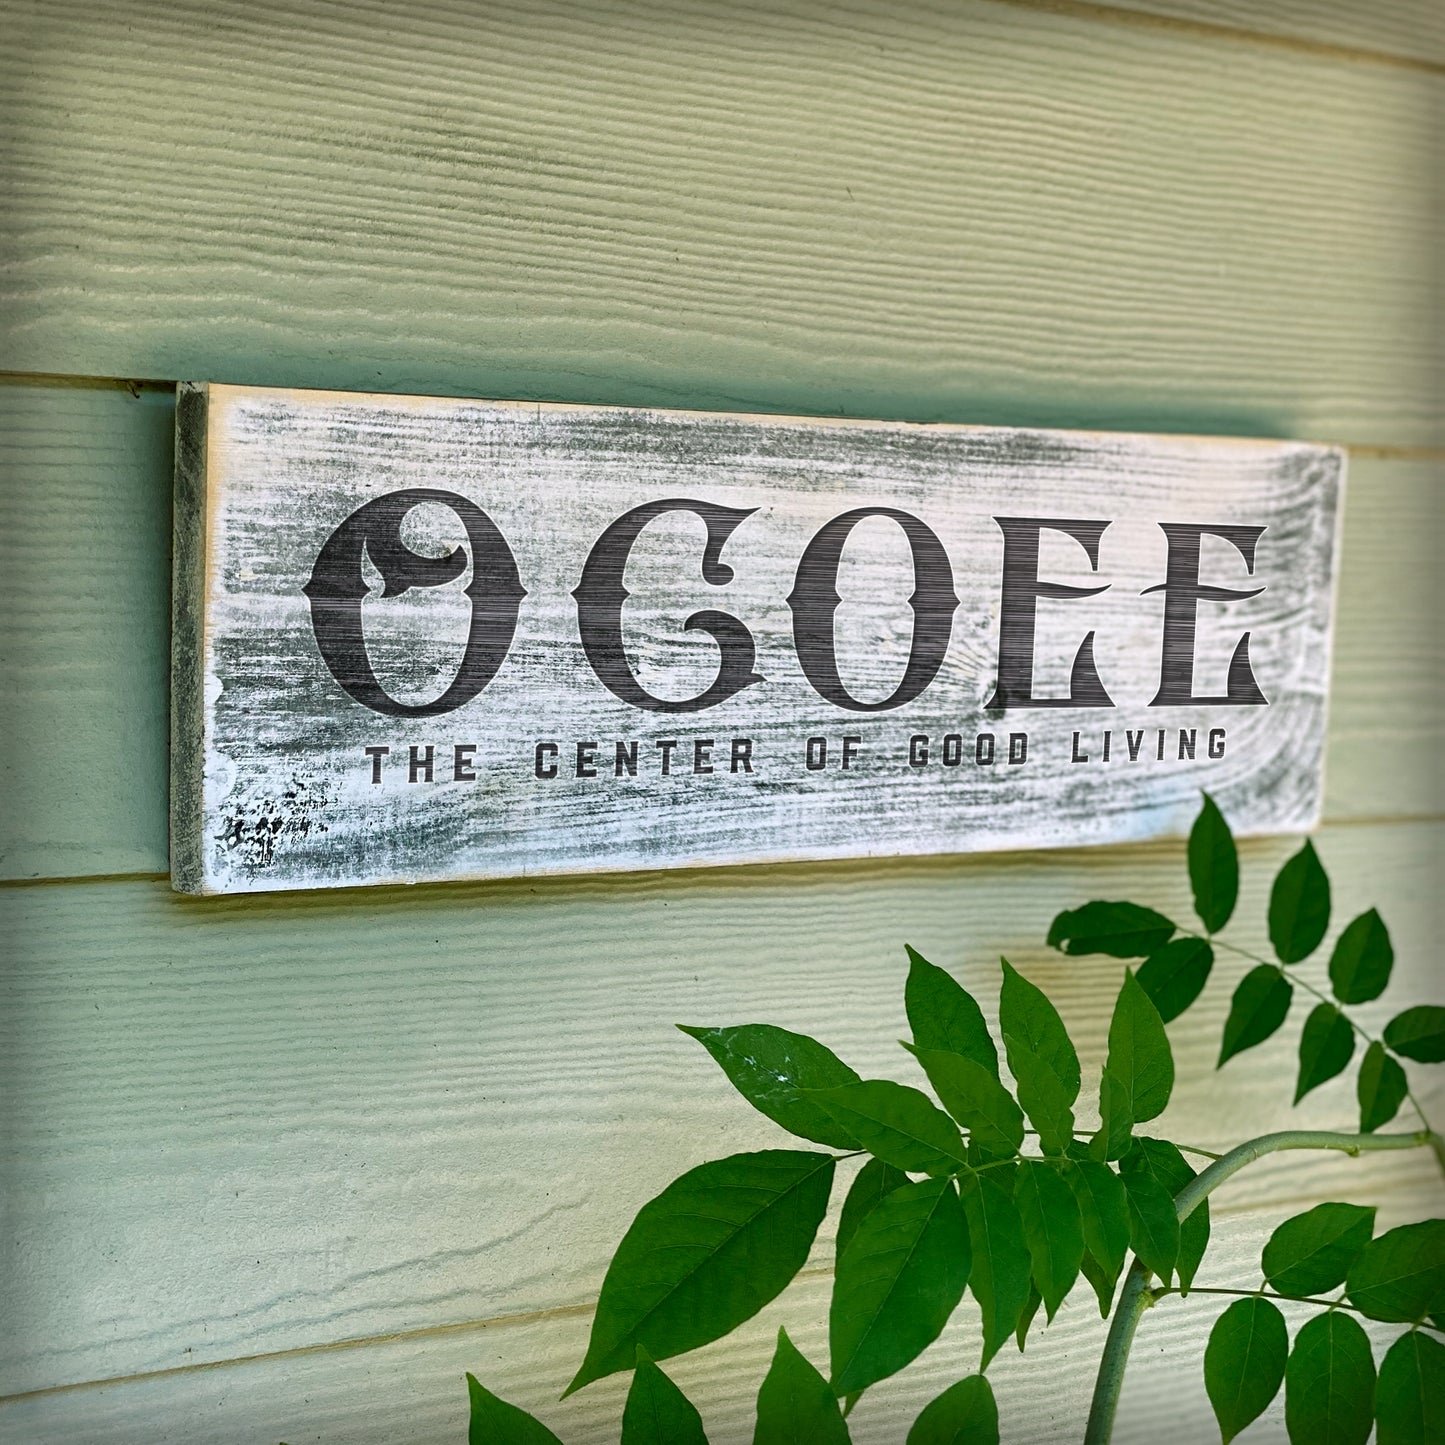 Ocoee FL - Handcrafted Artisan Wood Sign